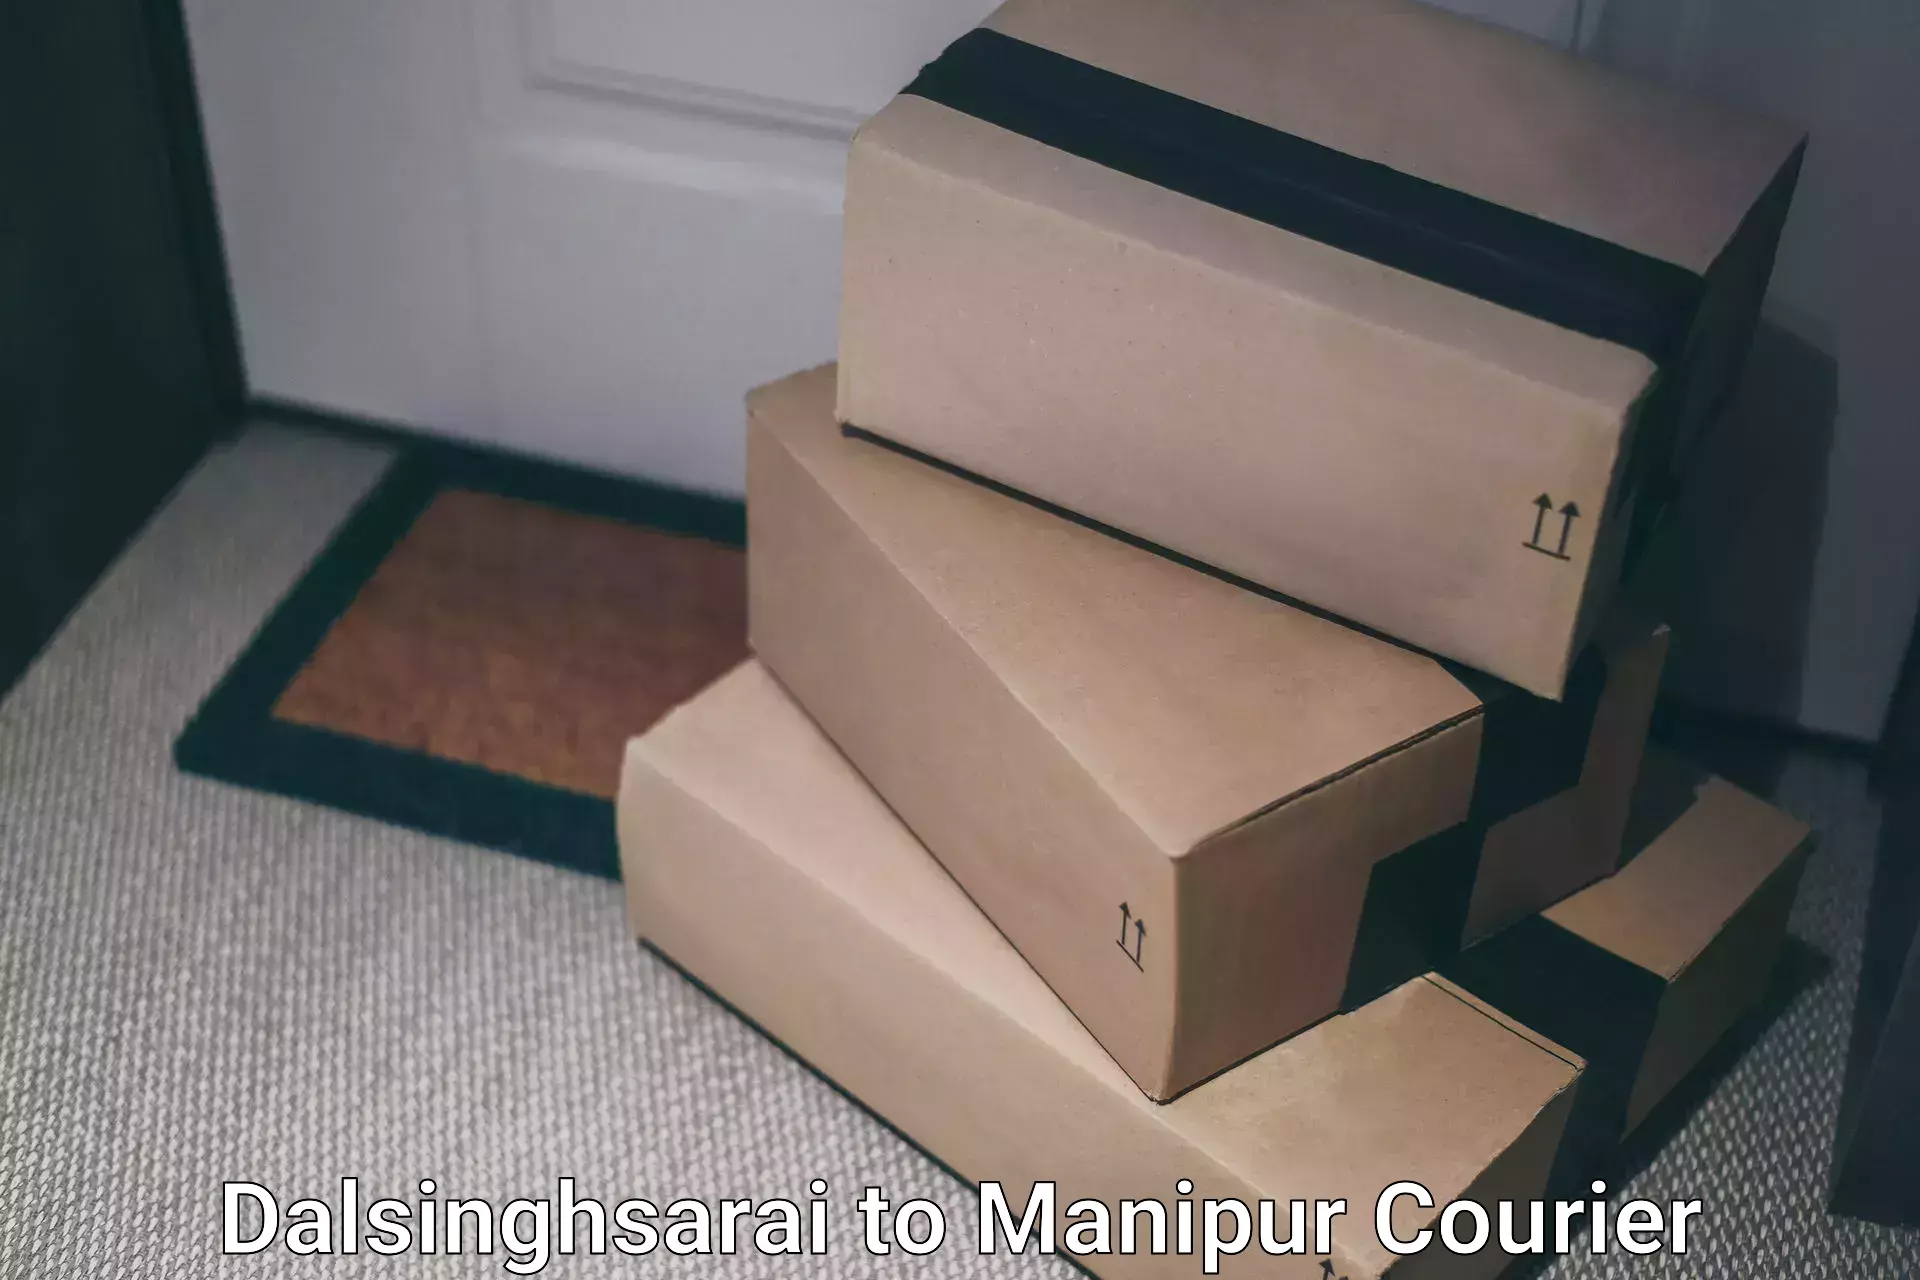 Online shipping calculator Dalsinghsarai to Manipur